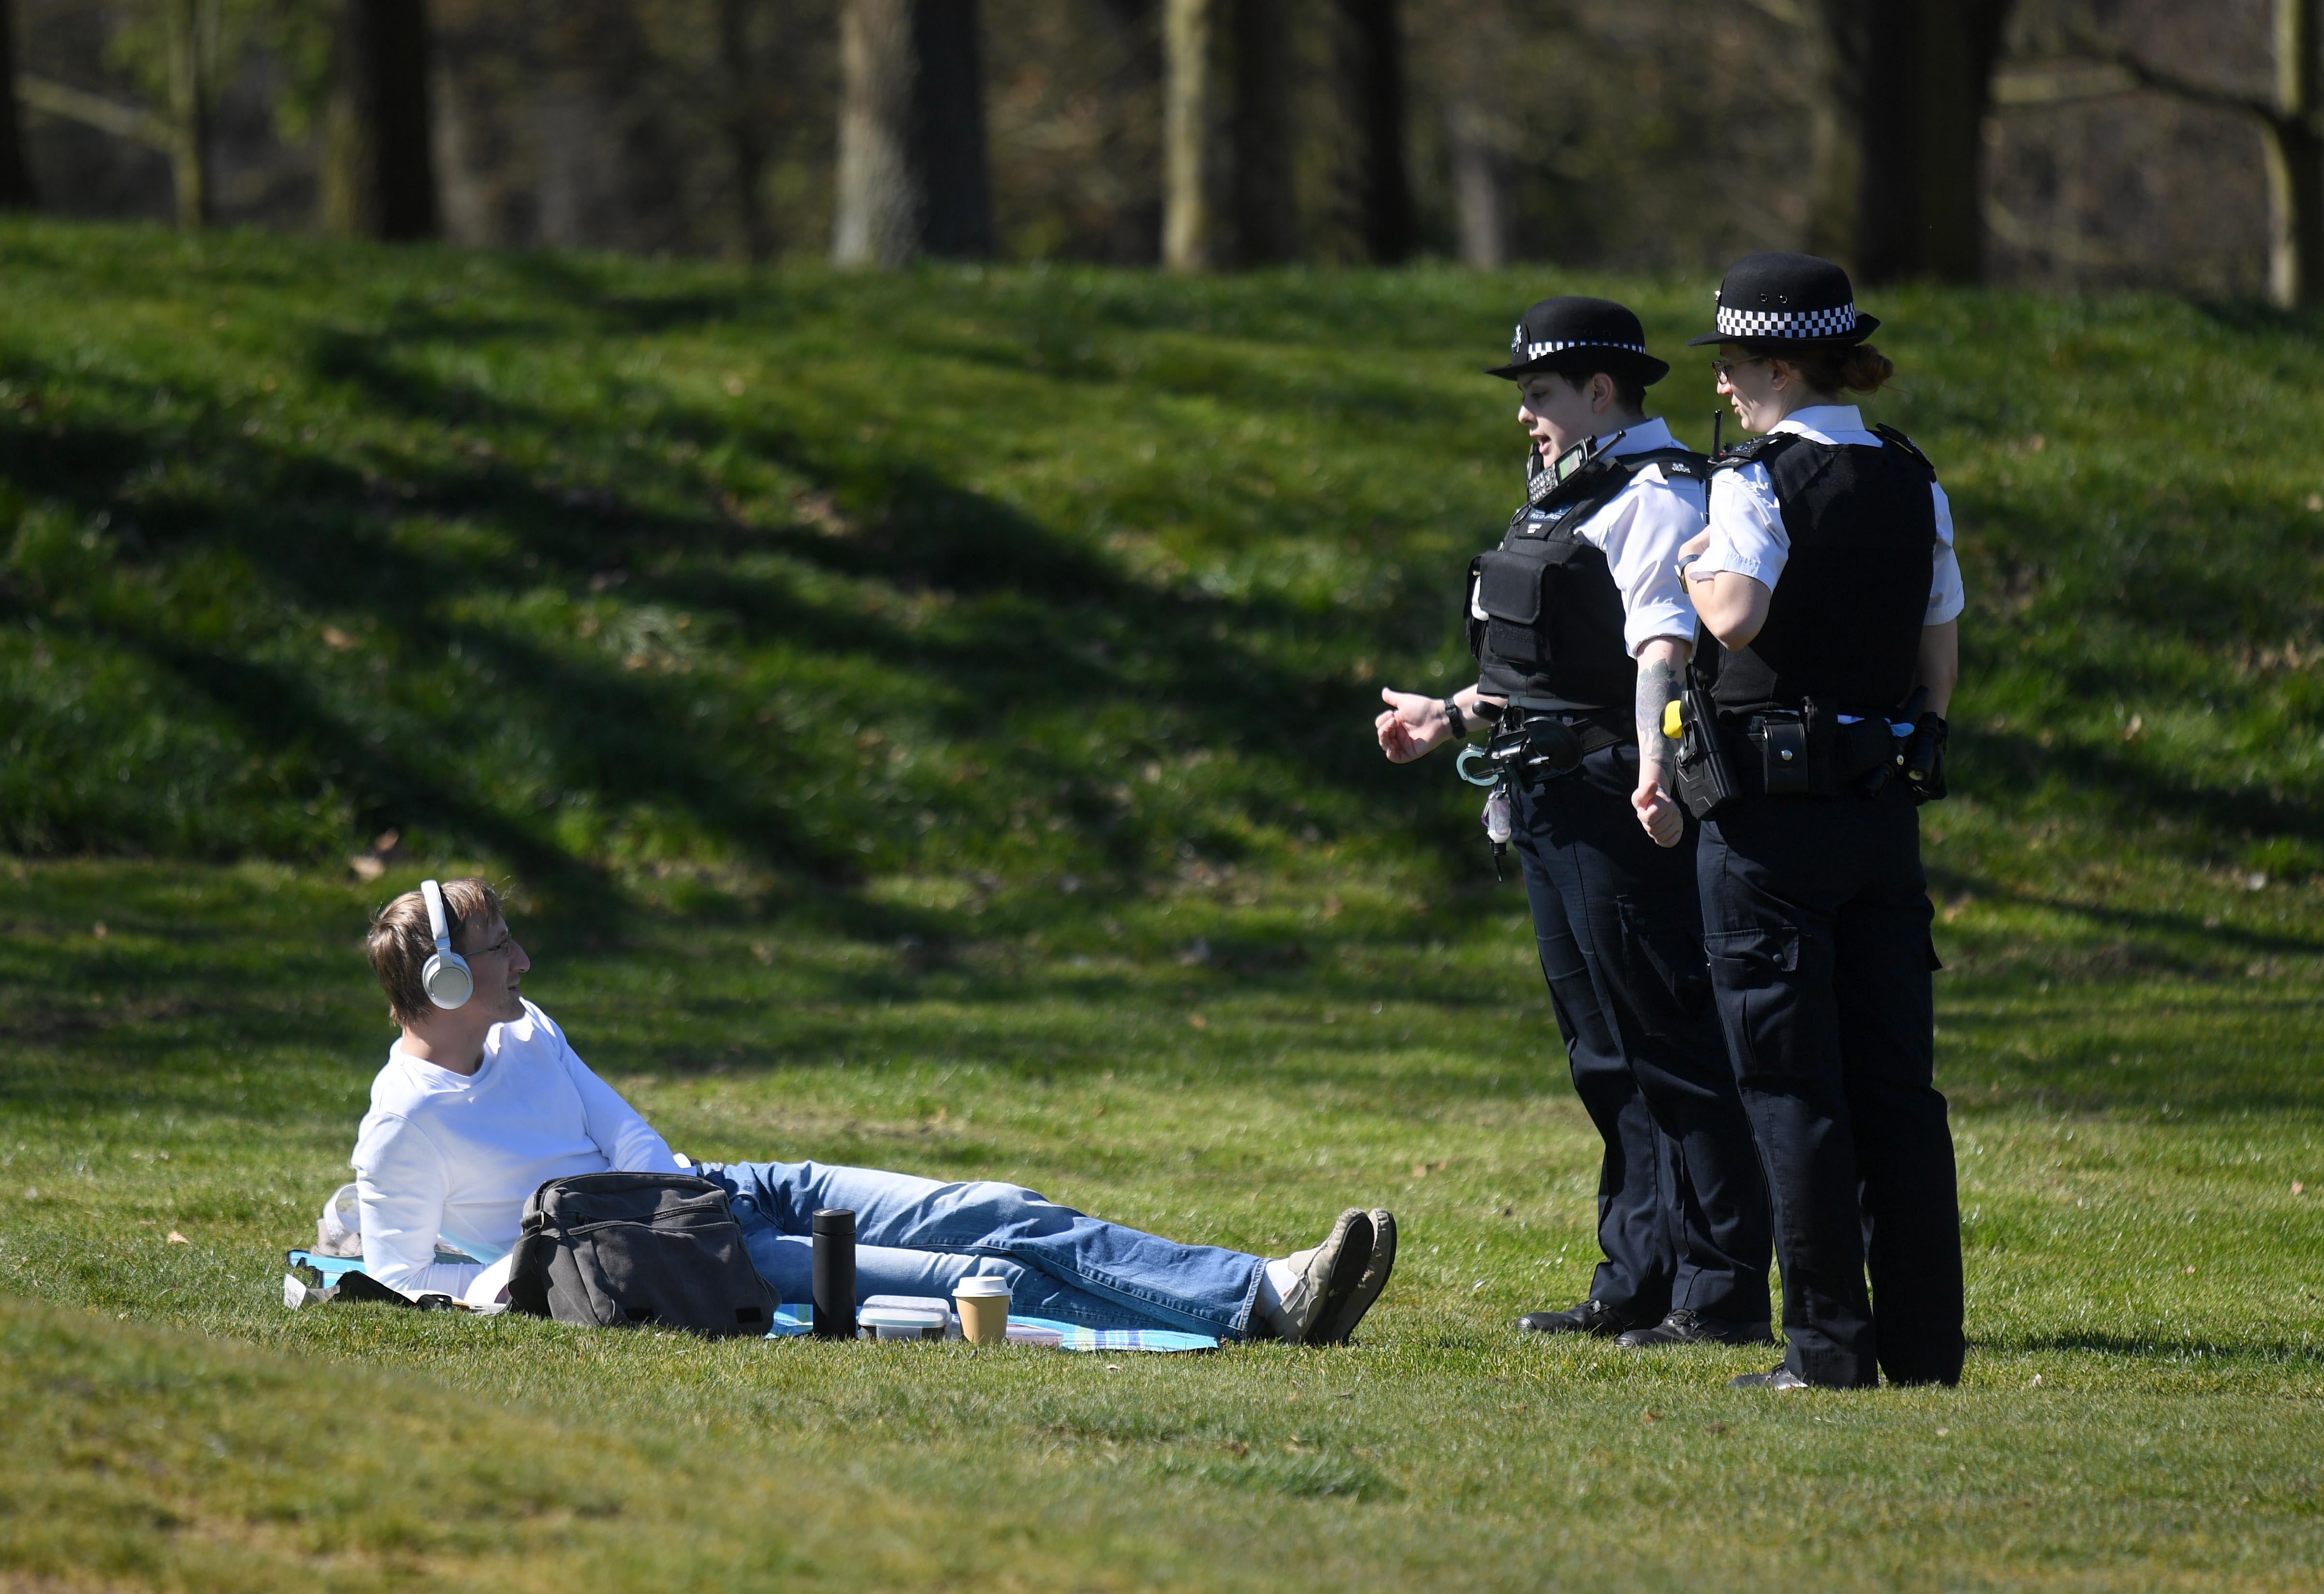 Police enforcing lockdown rules speak to a sunbather in a London park